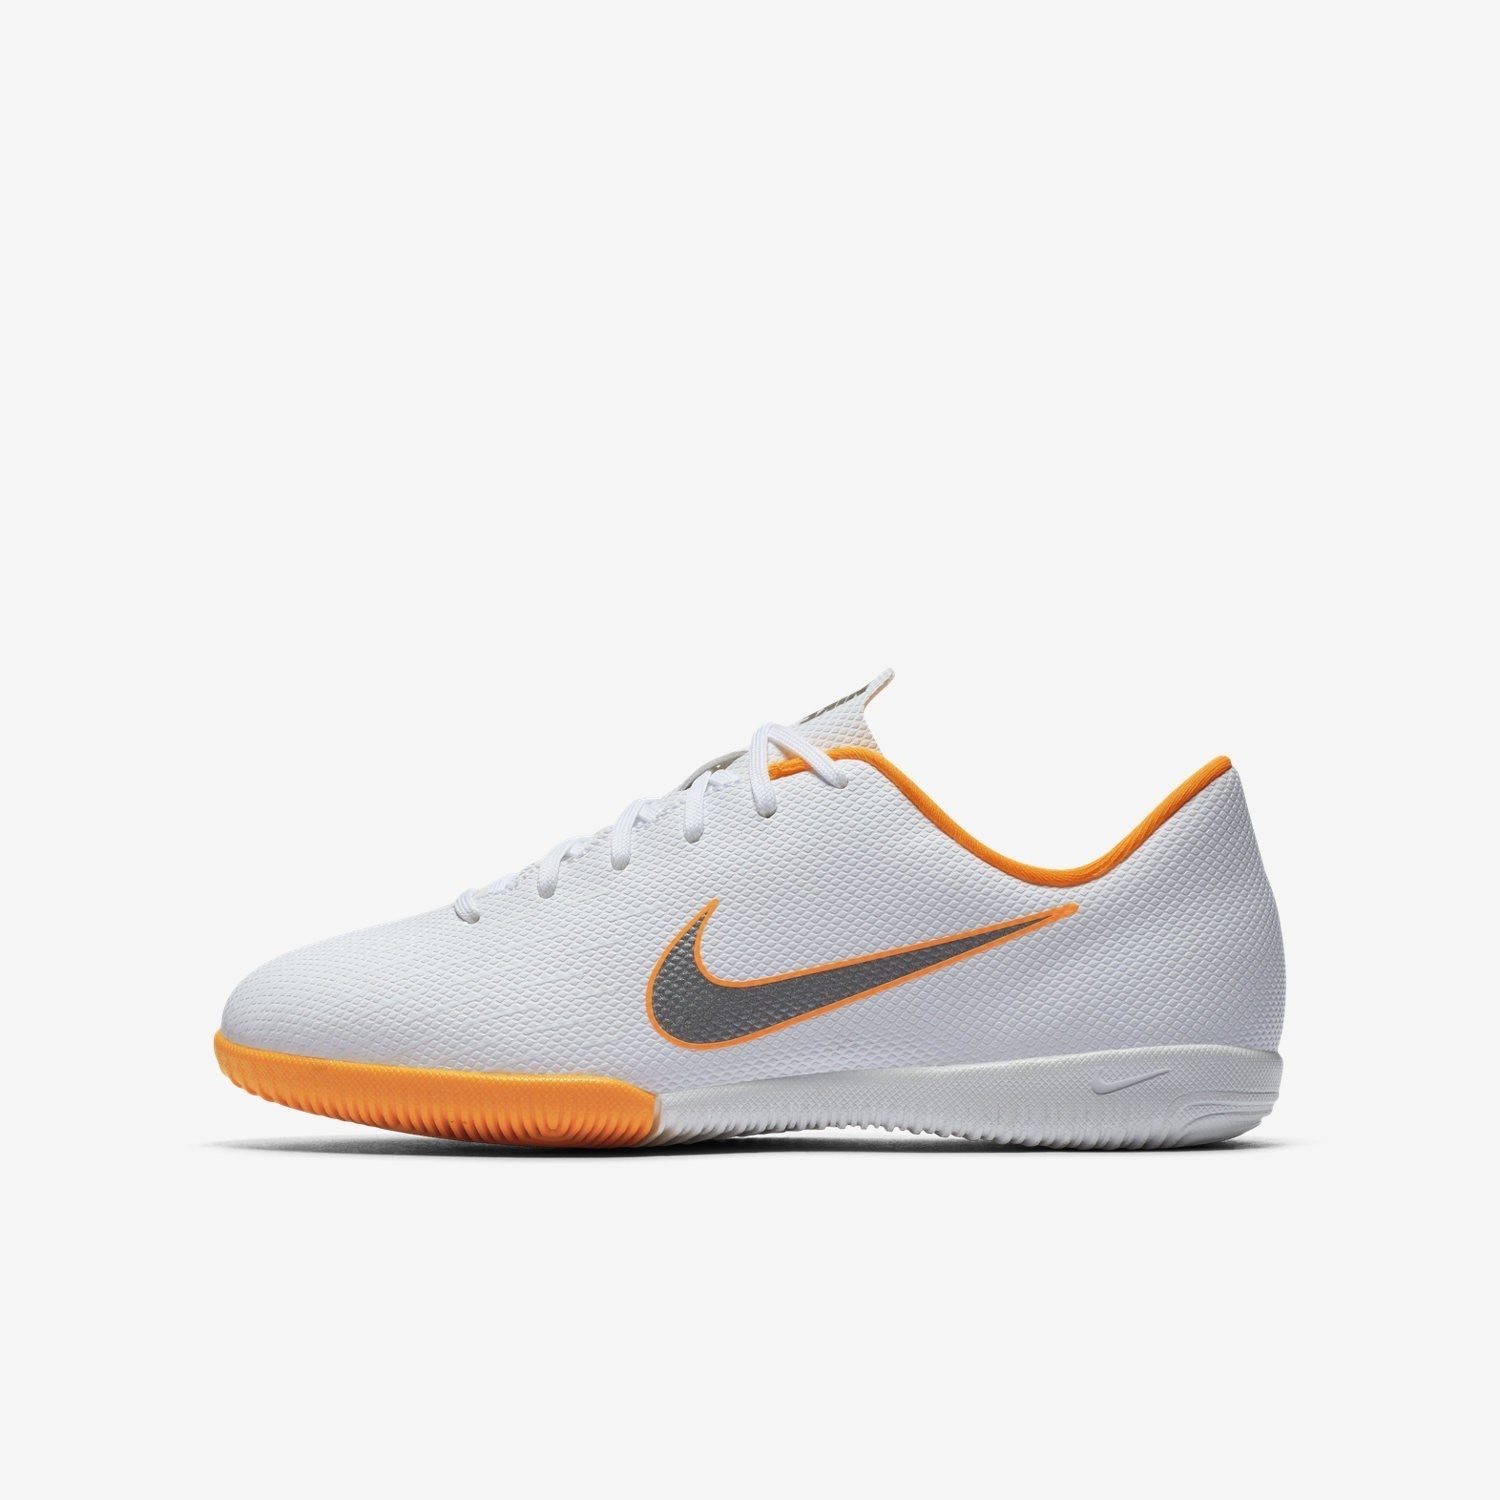 Kid's MercurialX Vapor XII Academy Soccer Shoes - White/Orange/